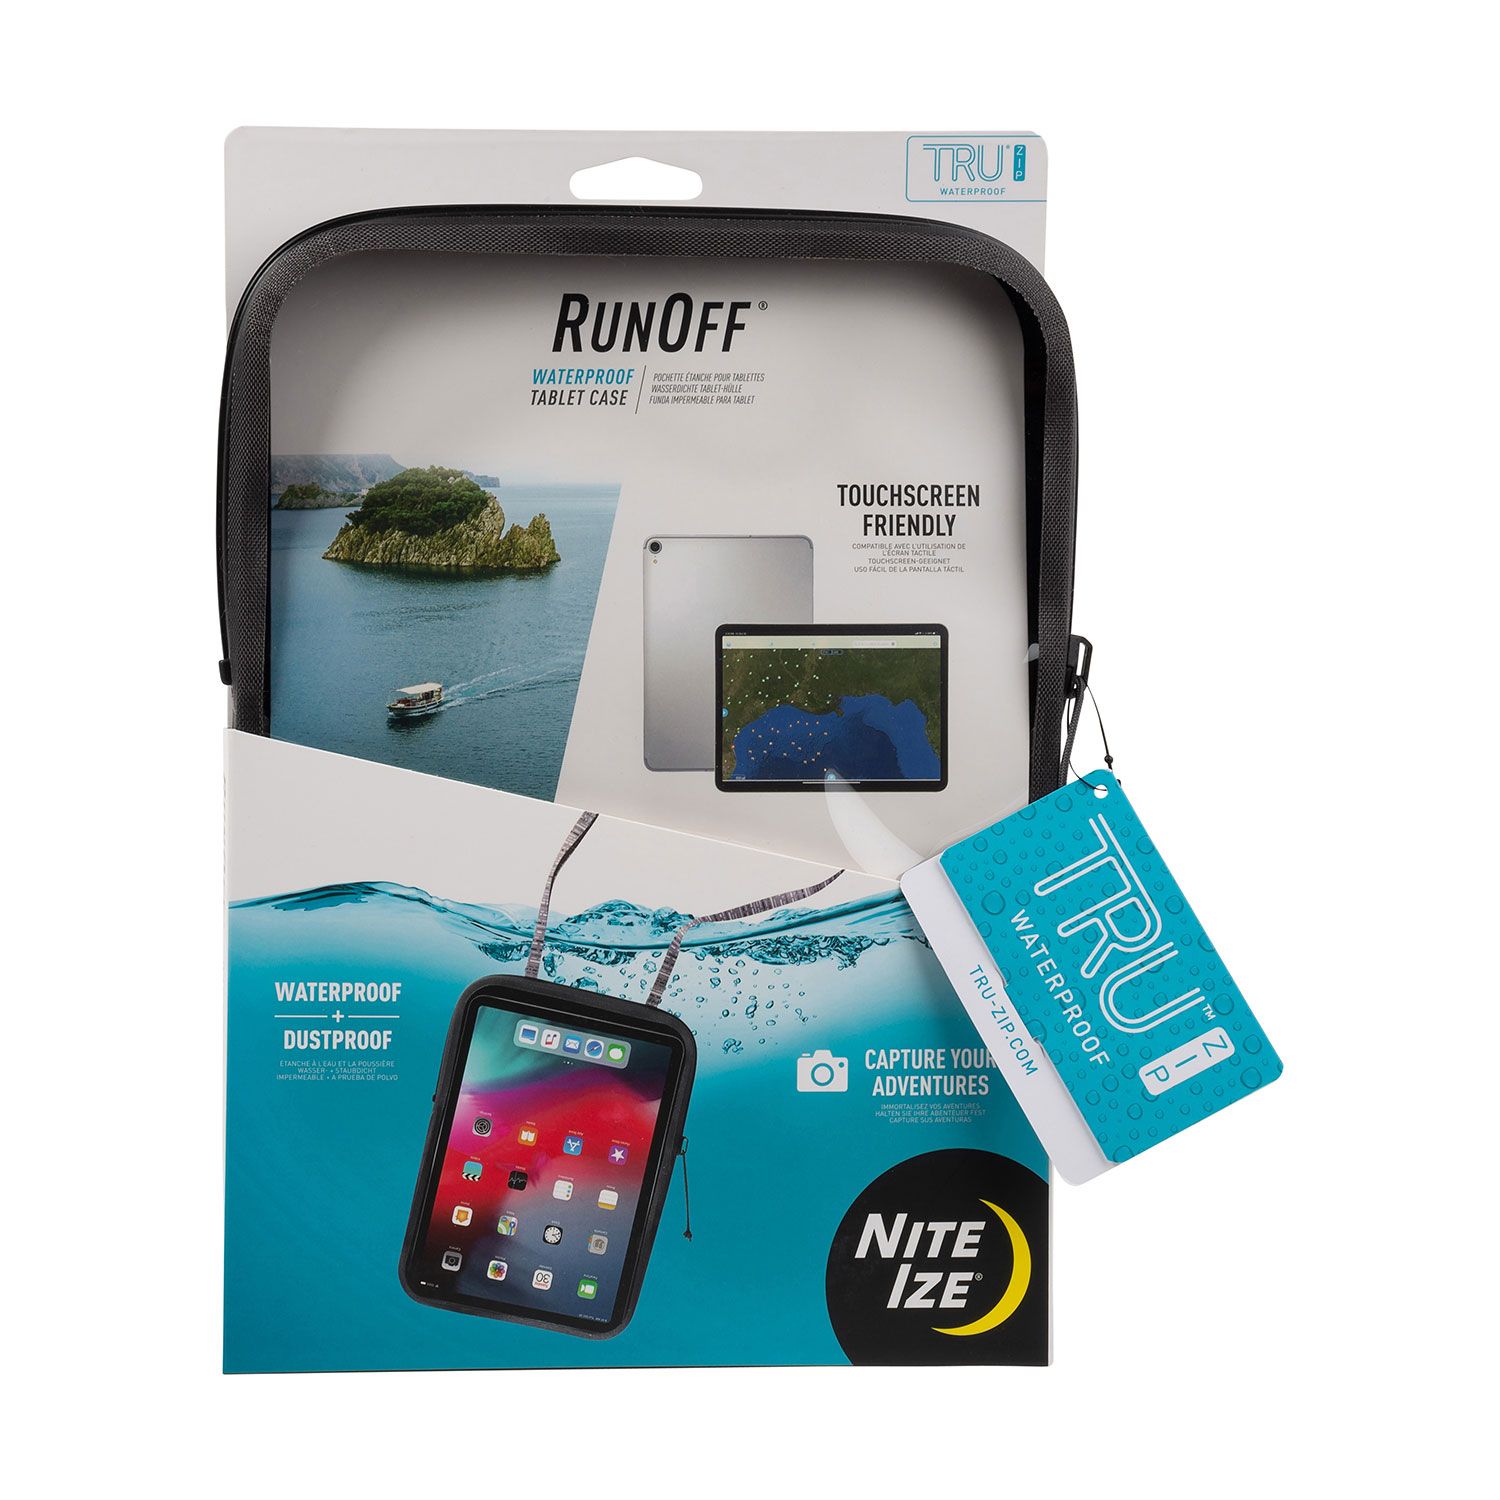 Nite Ize RunOff Waterproof Tablet Case with TRU Zip Technology